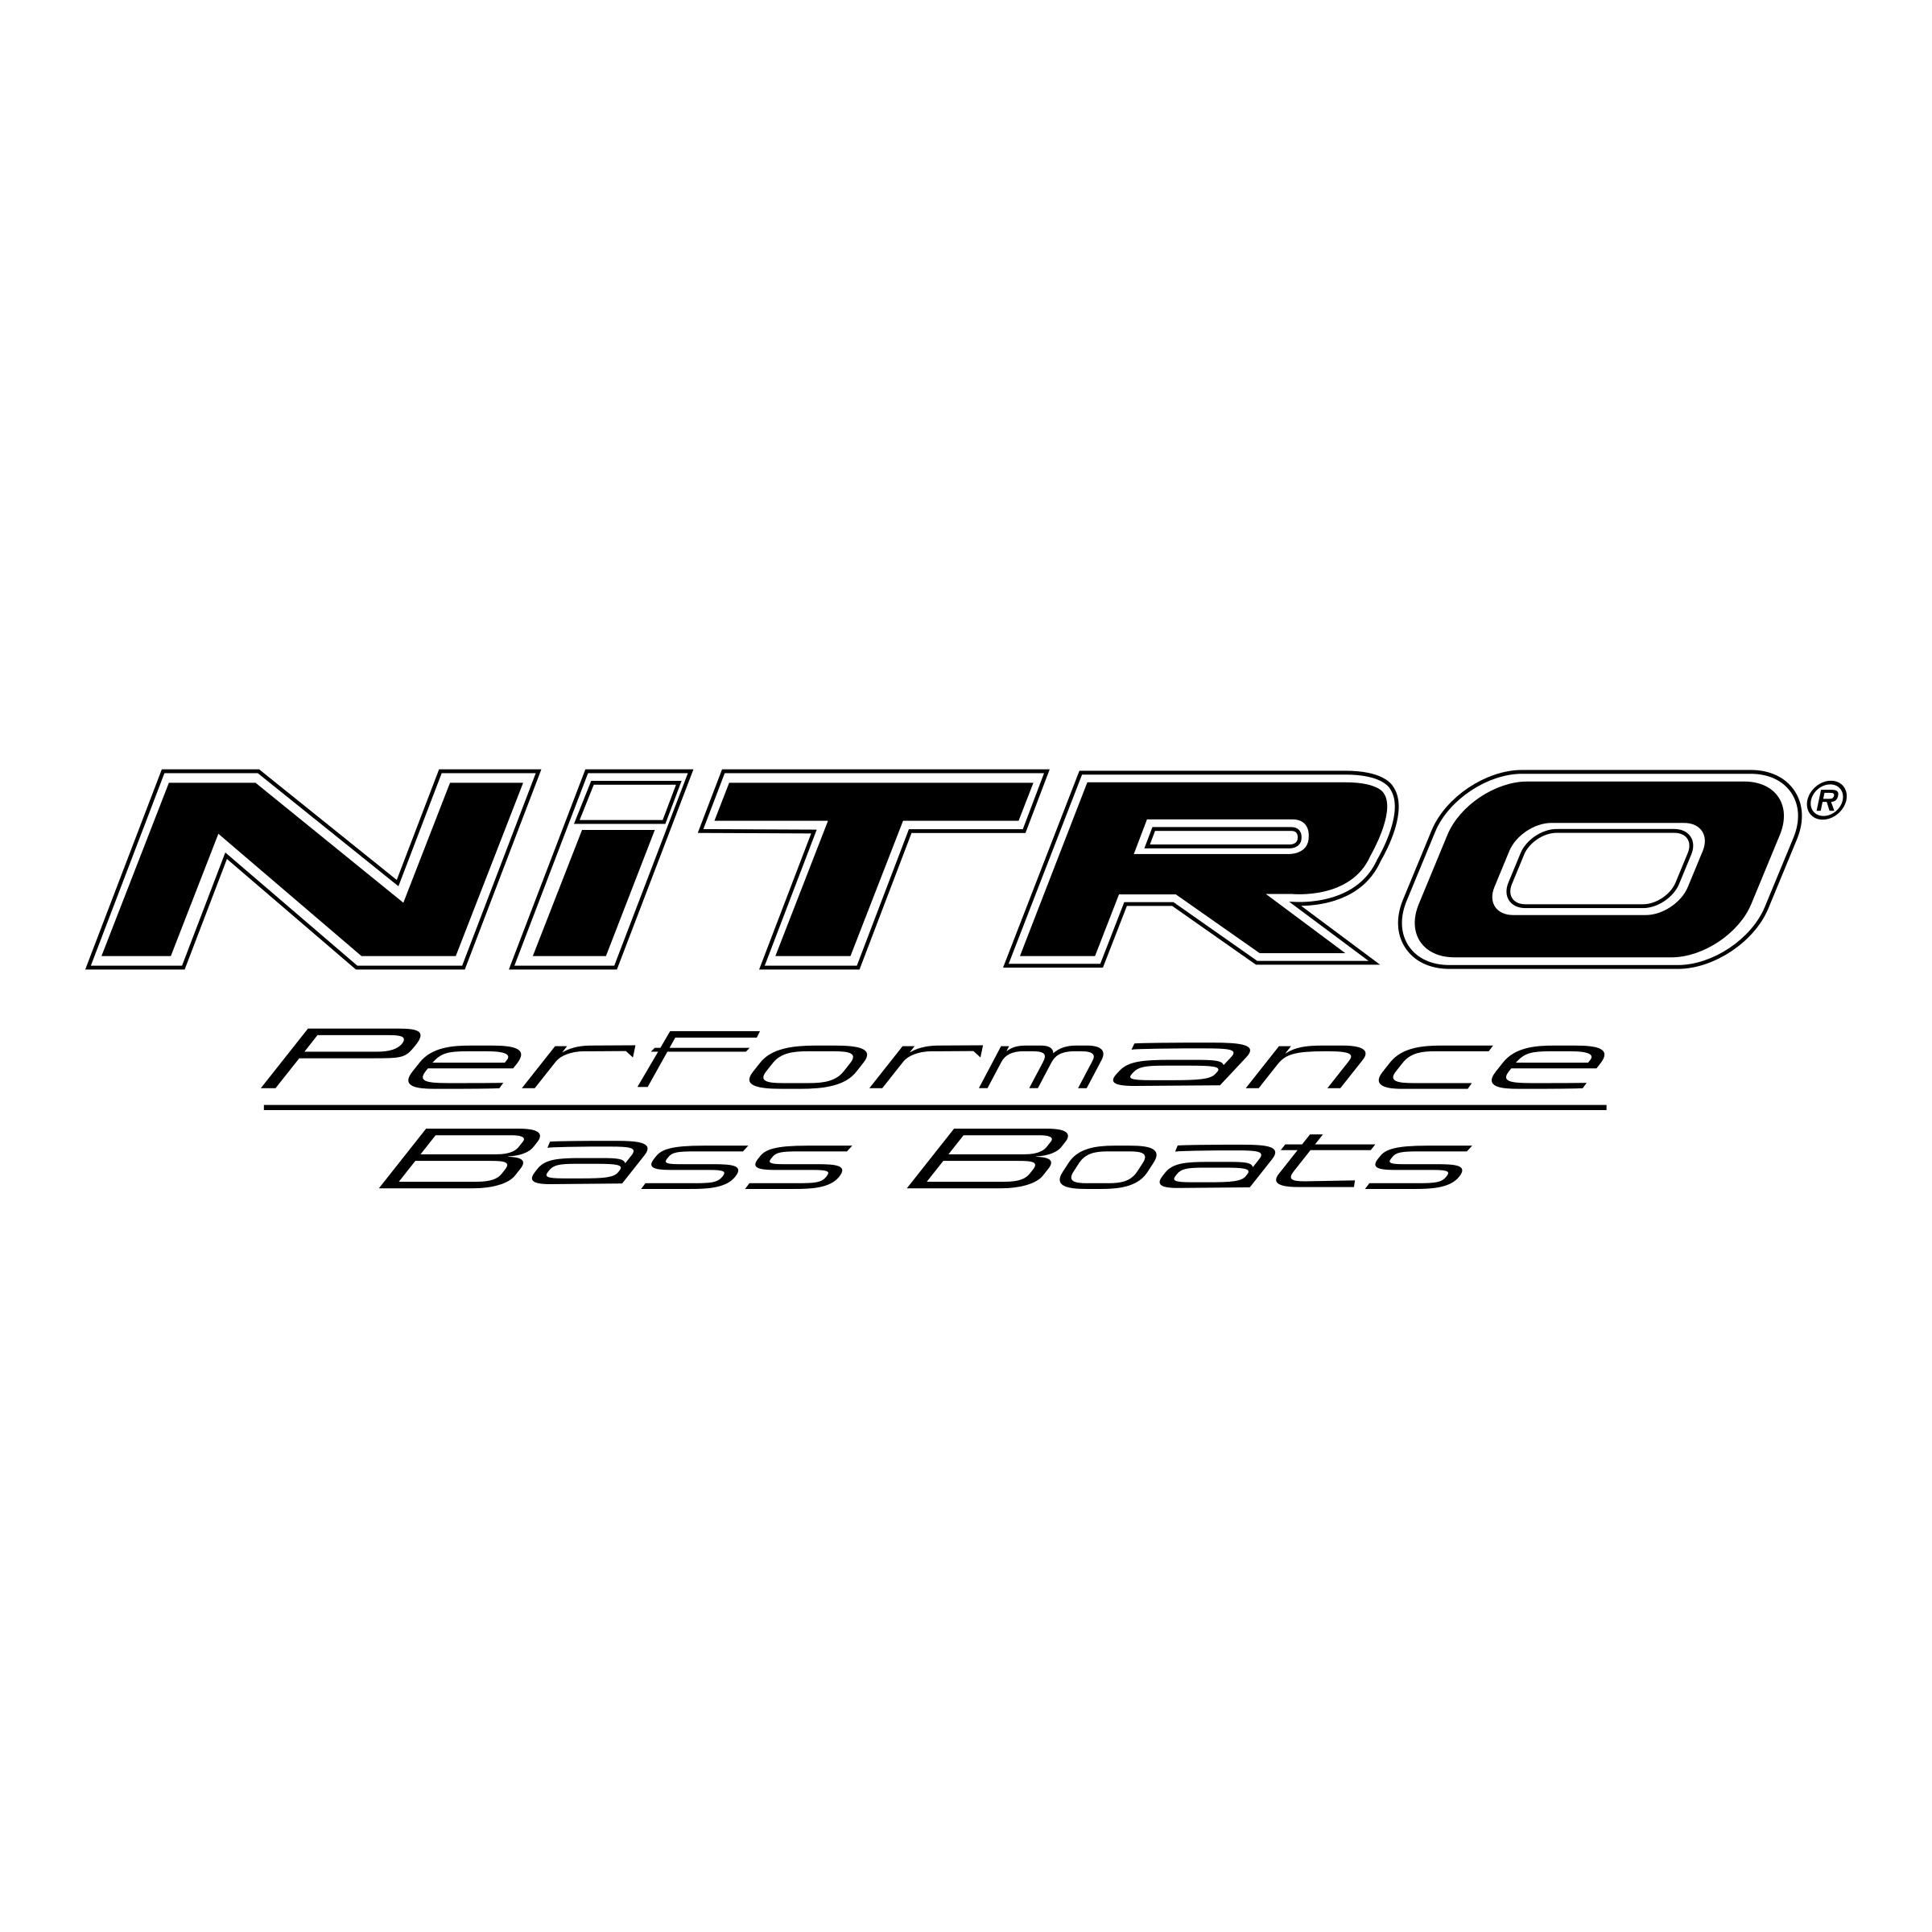 Nitro Logo - Nitro Logo PNG Transparent & SVG Vector - Freebie Supply